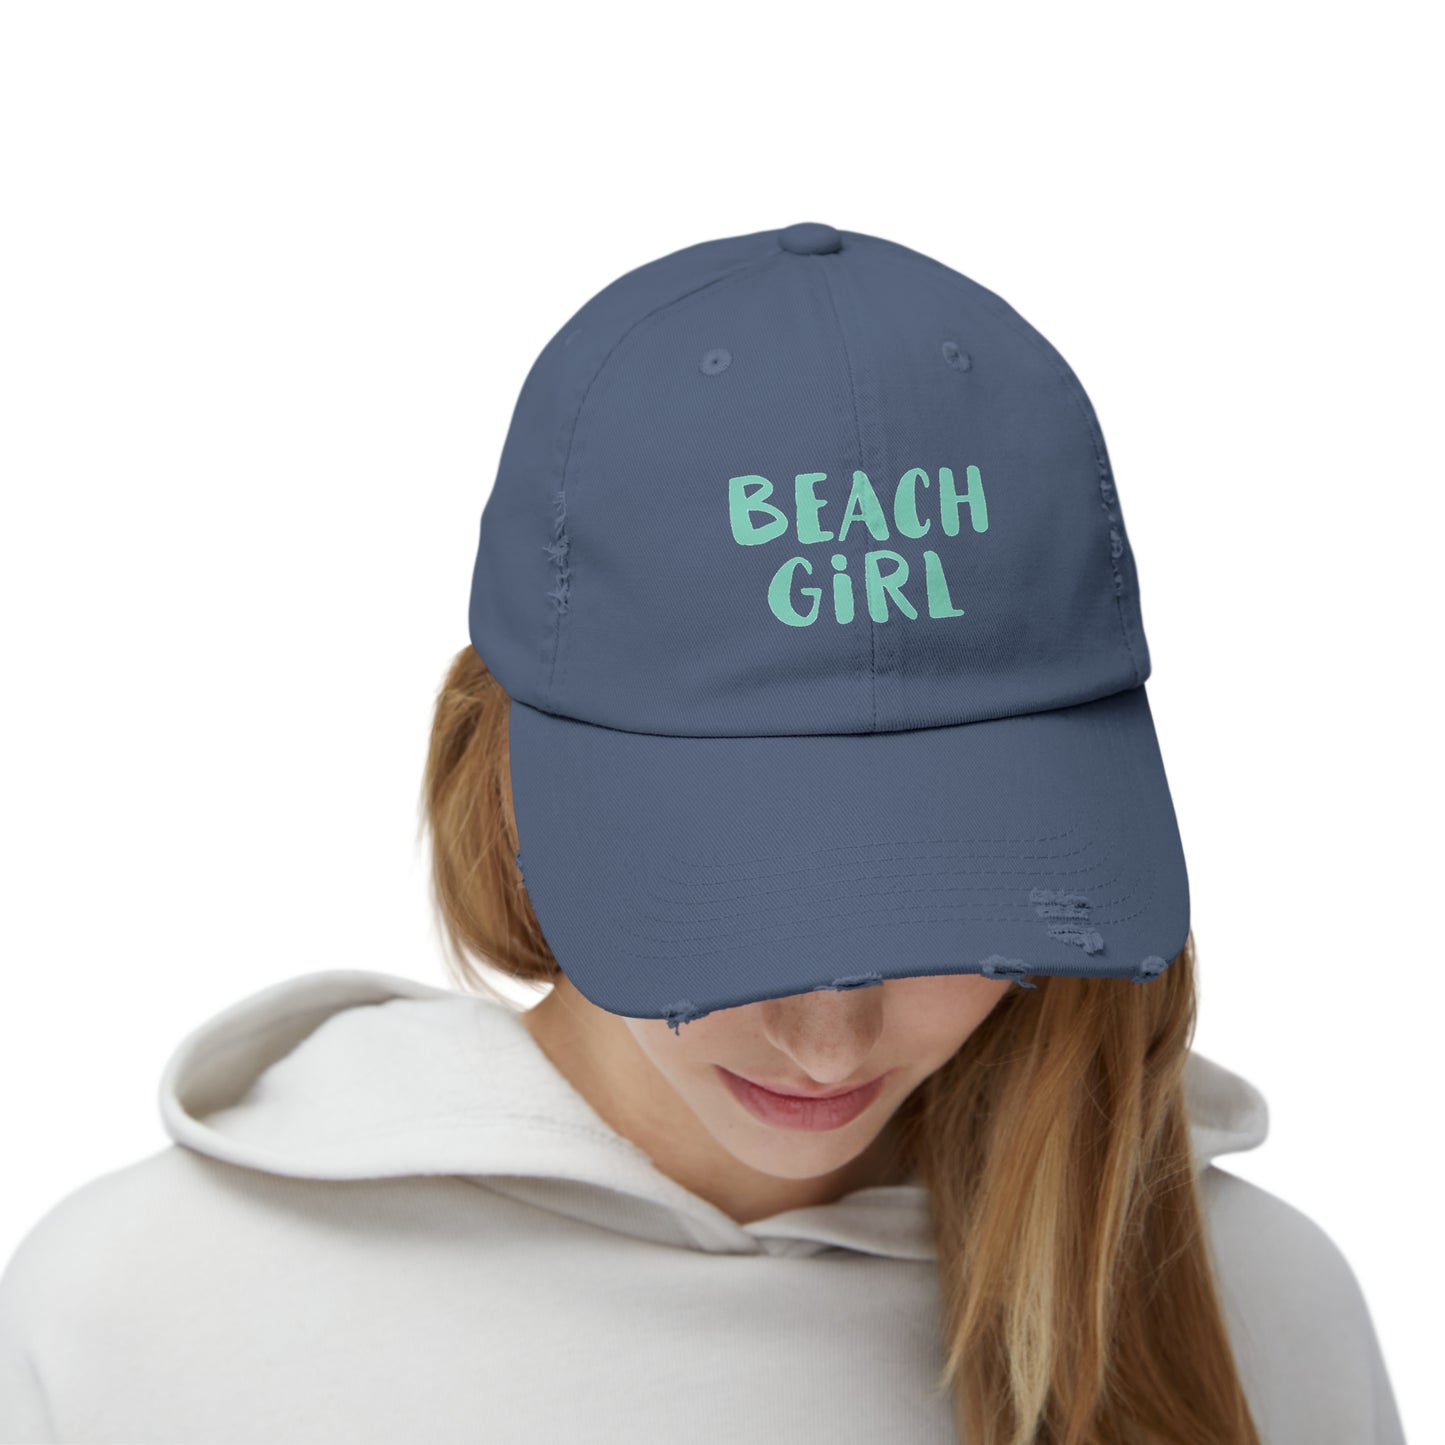 Beach girl Unisex Trucker Hat